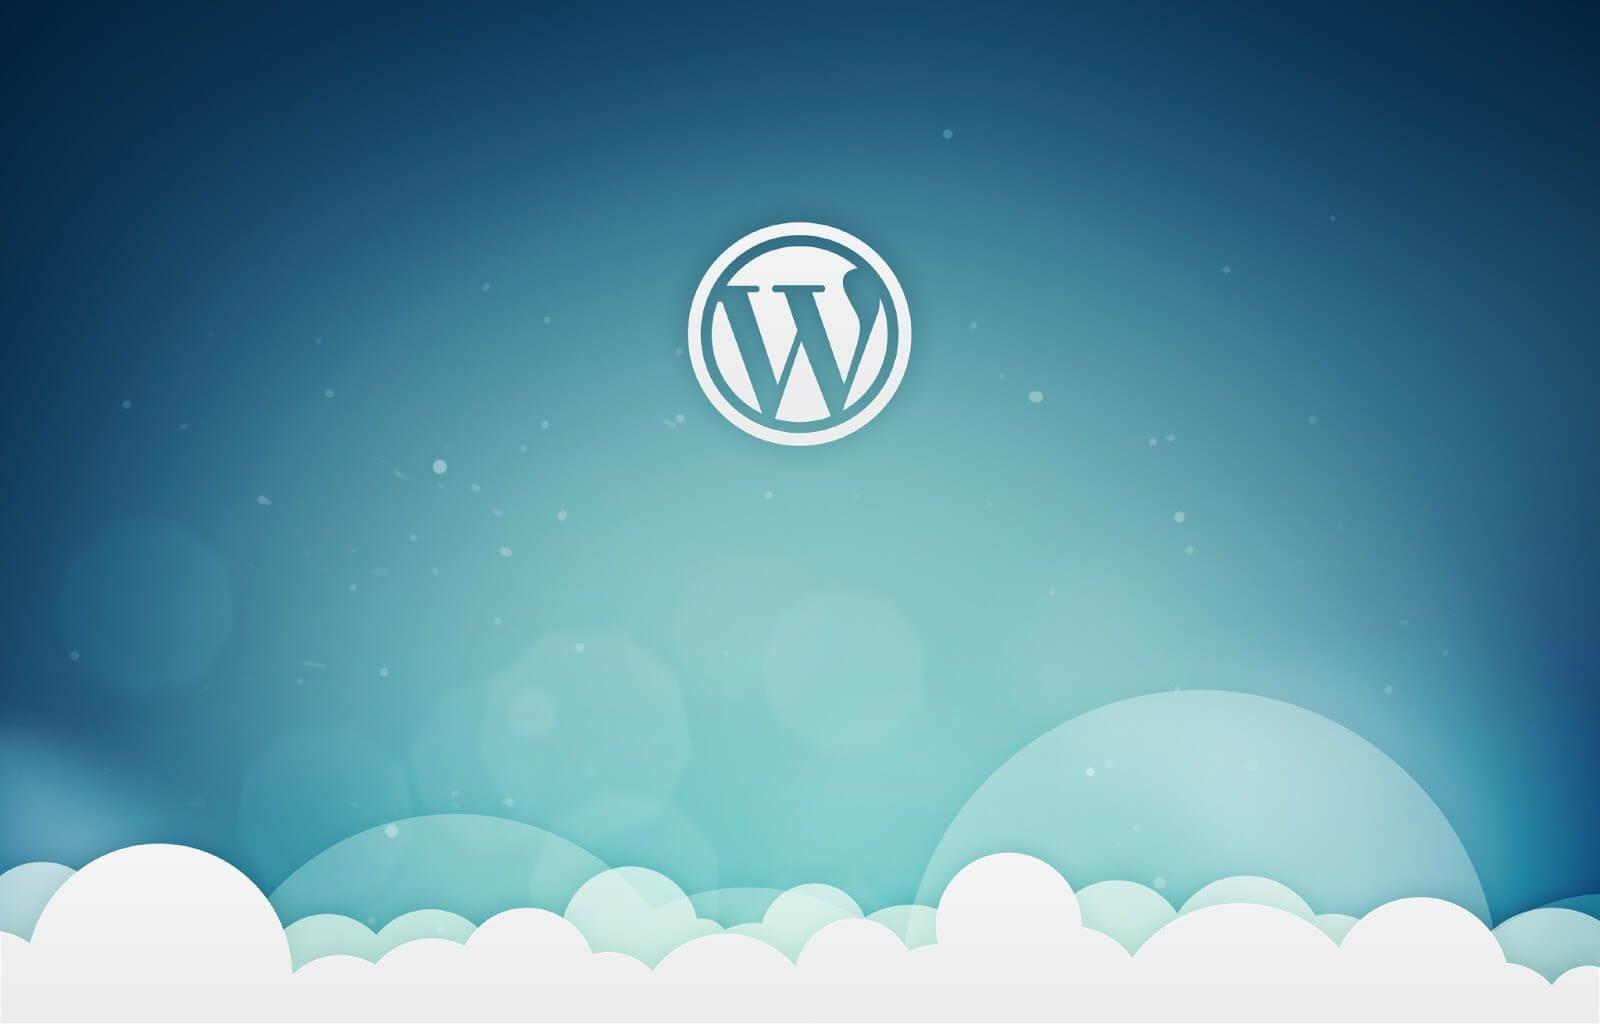 WordPress WallPapers